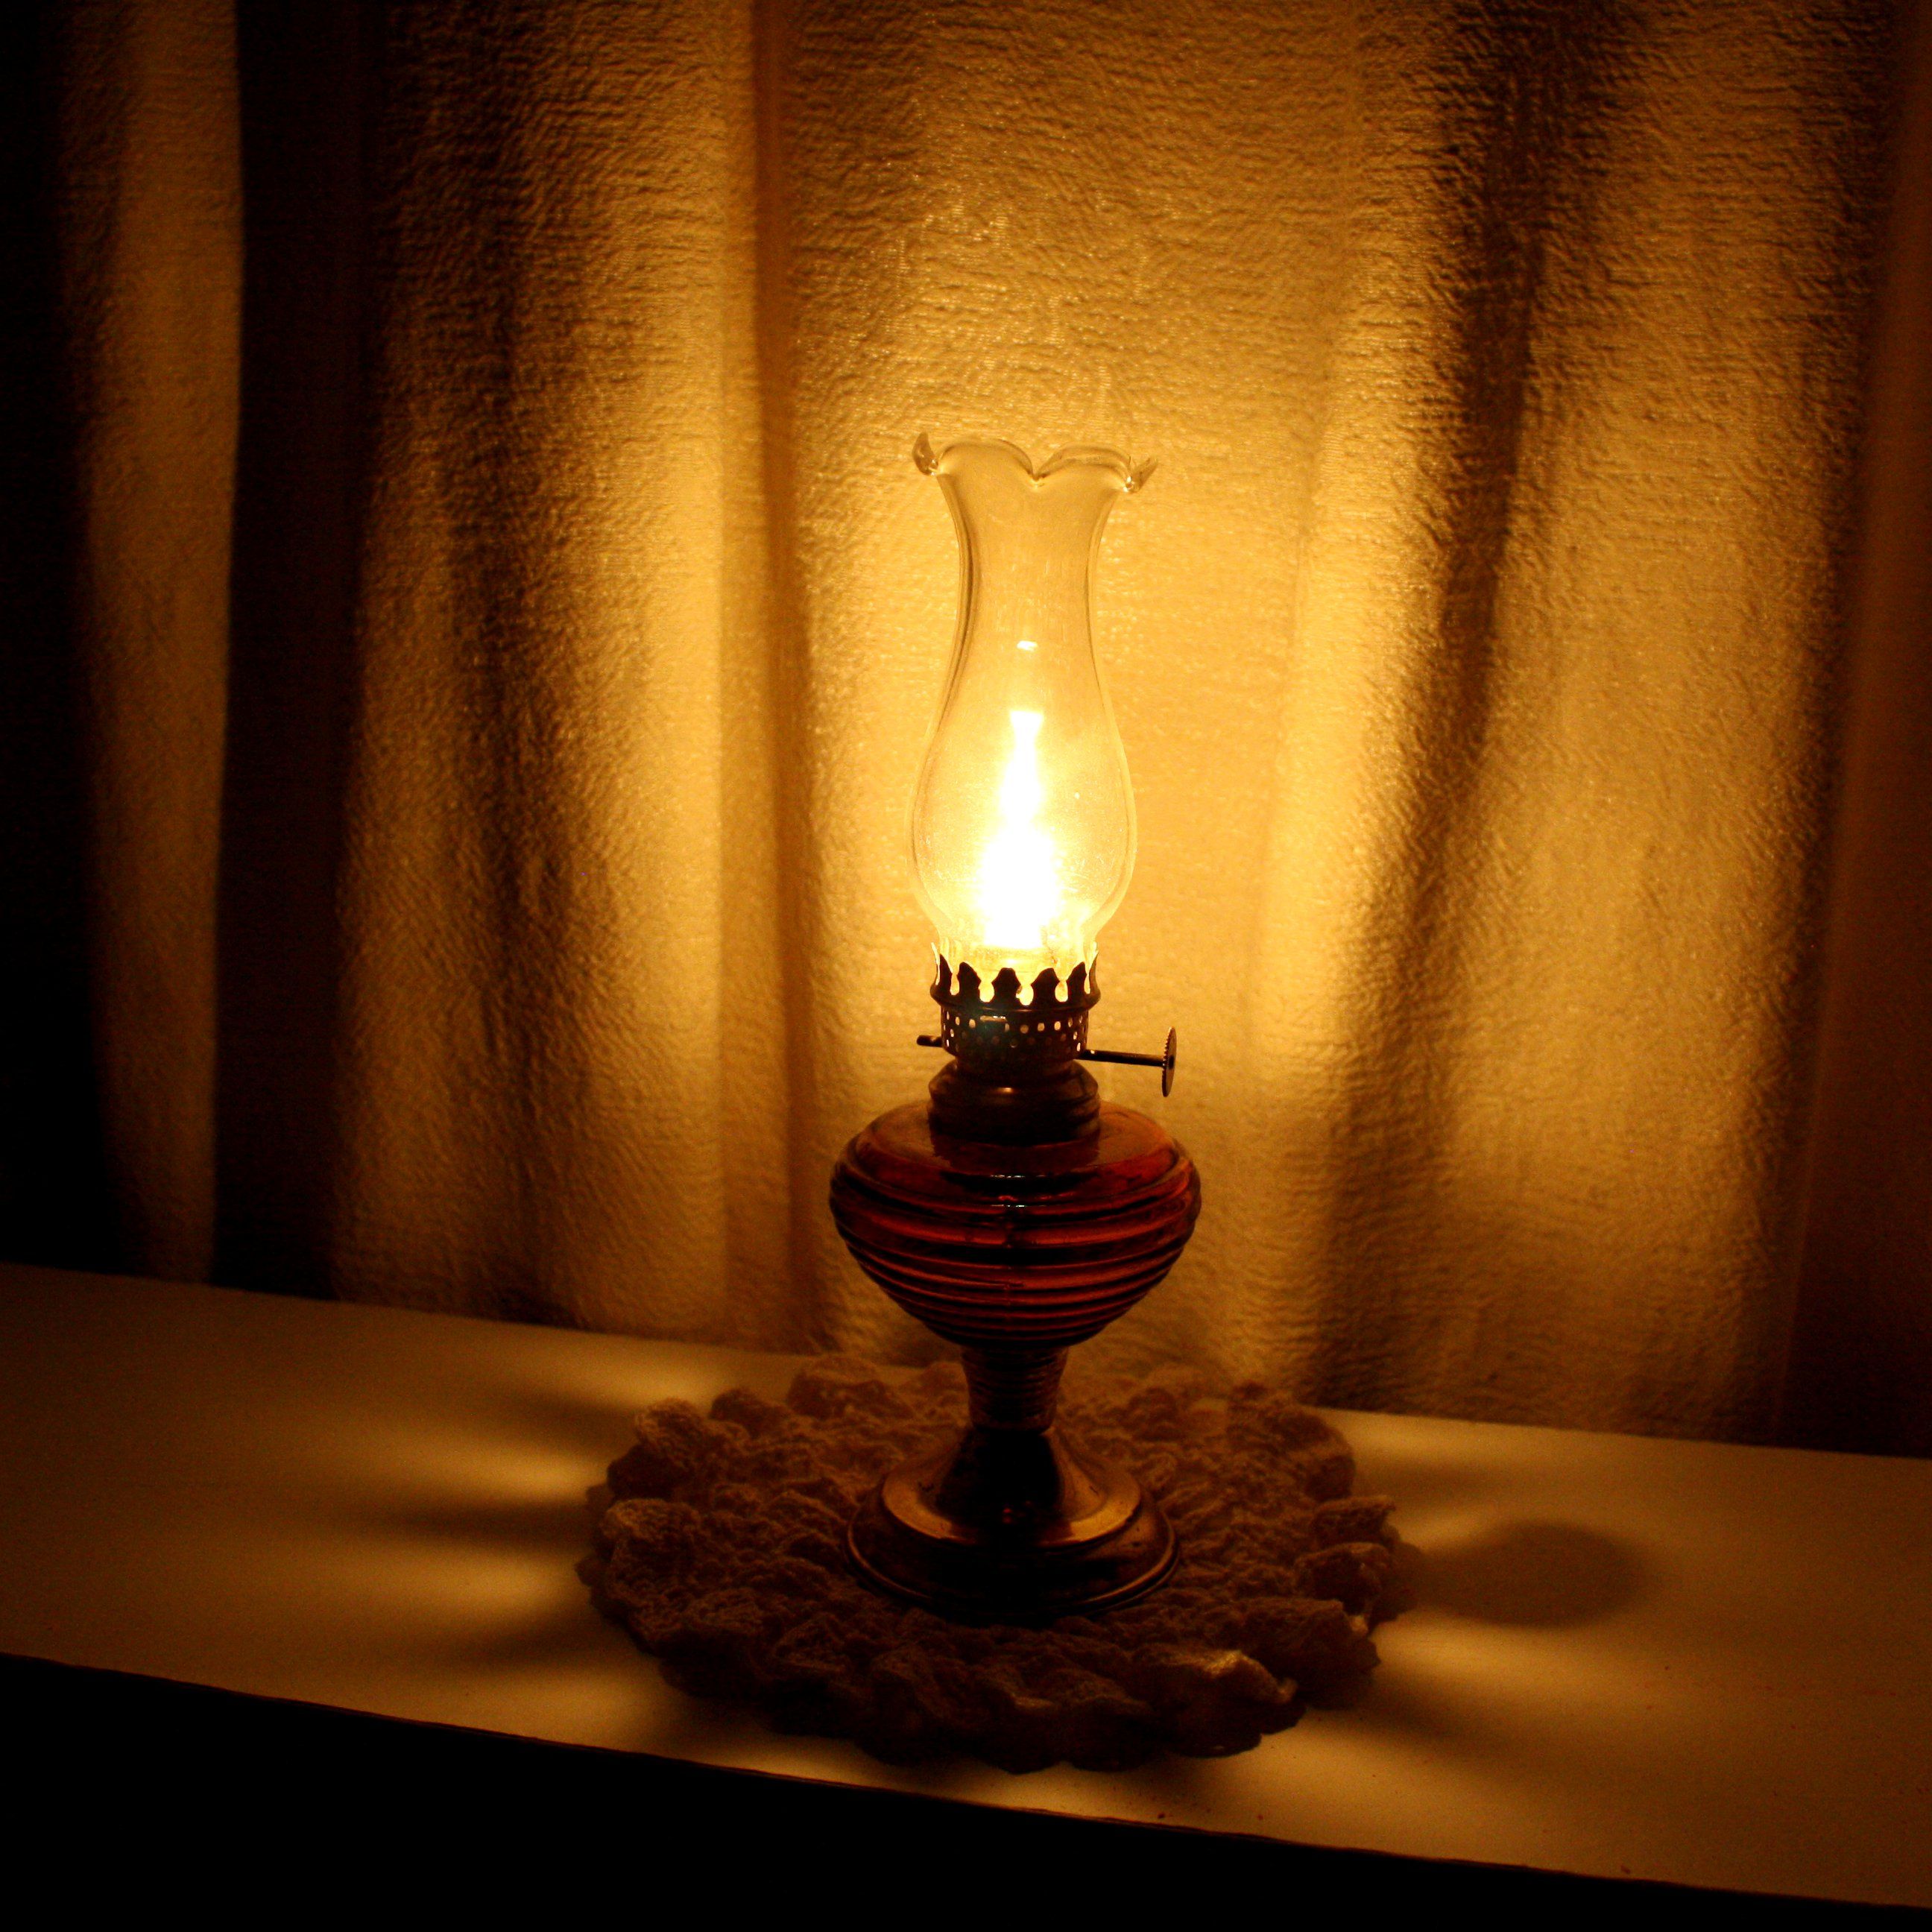 Burning Oil Lamp Picture. Free Photograph. Photo Public Domain